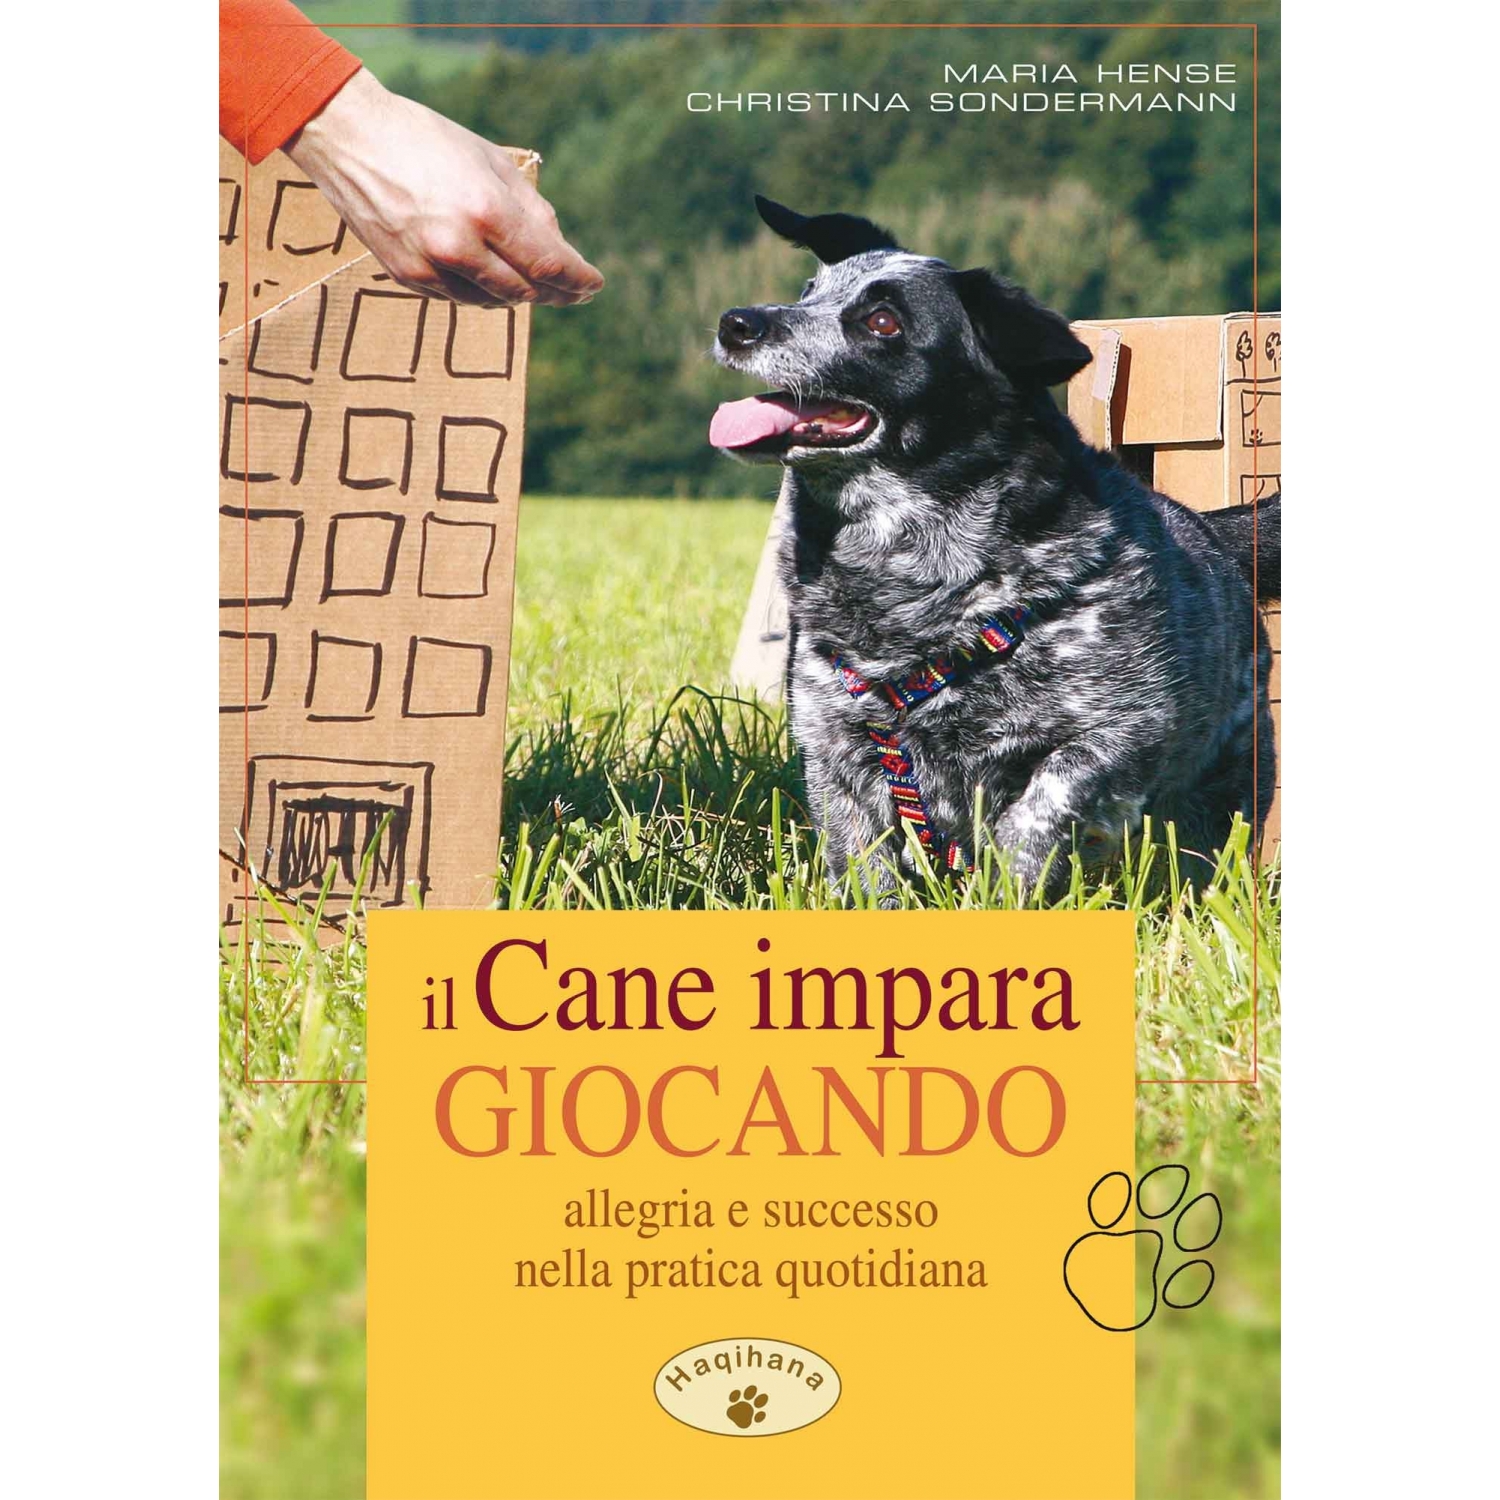 Il Cane impara giocando (ITALIAN ONLY)